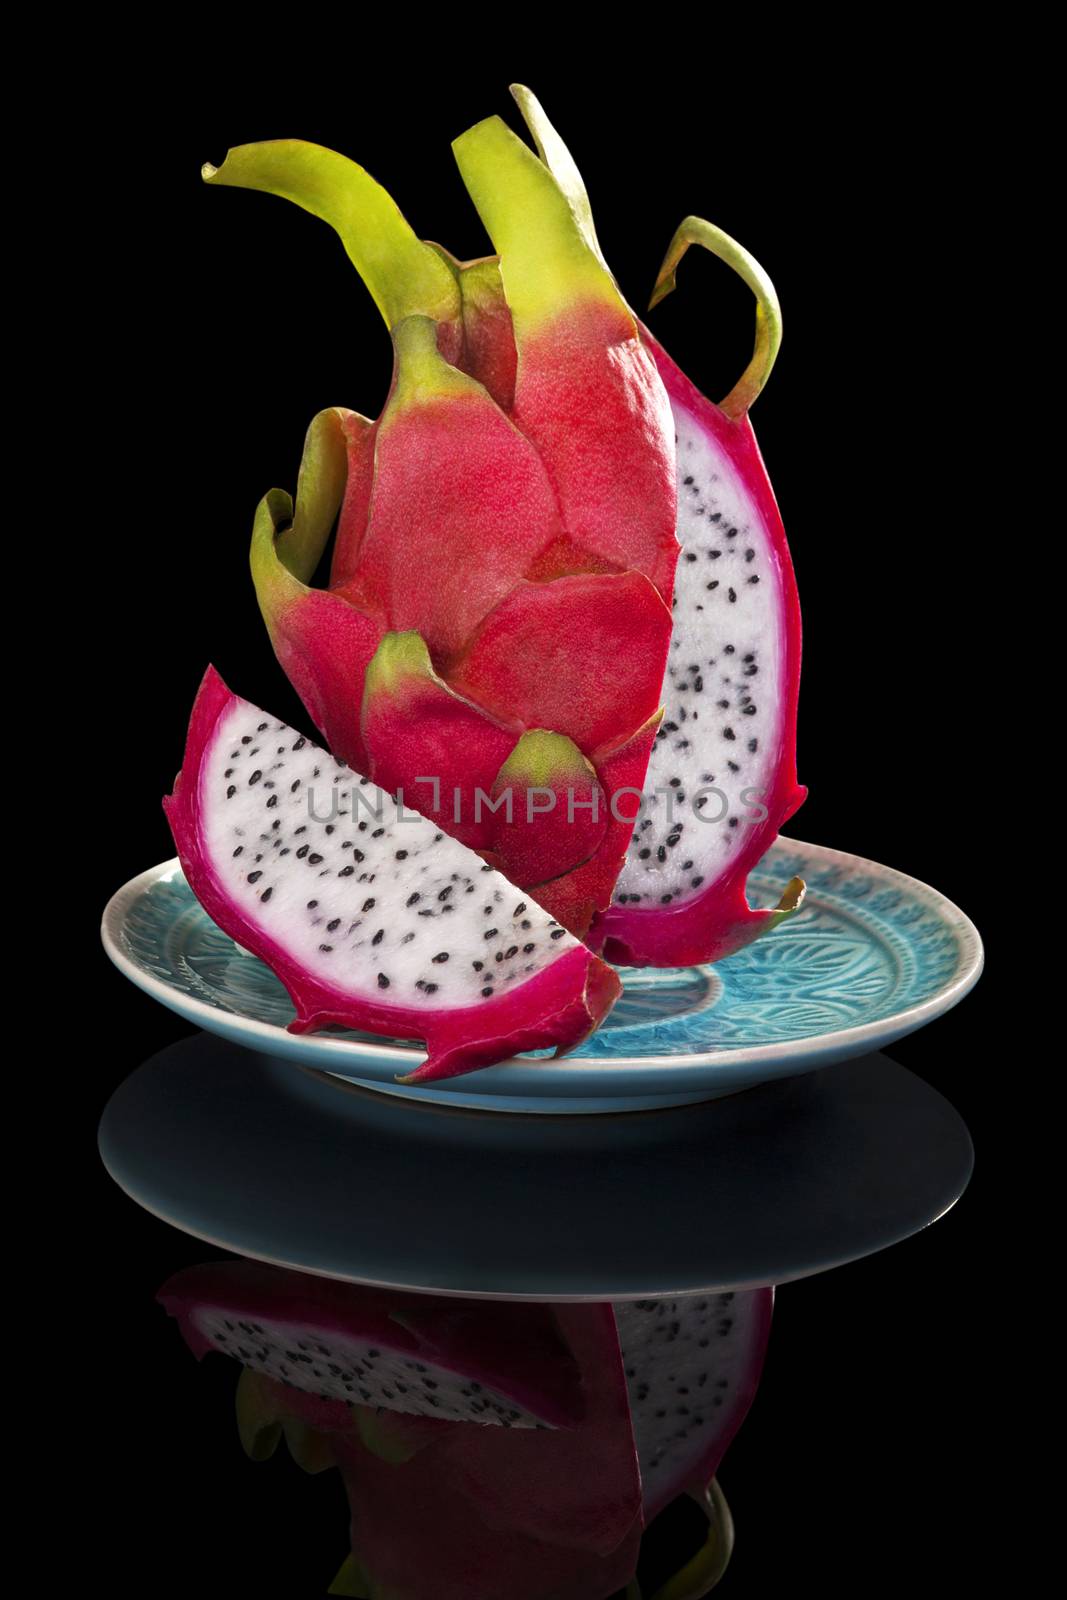 Luxurious dragon fruit isolated on black background. Tropical fruit, luxurious minimal style. 